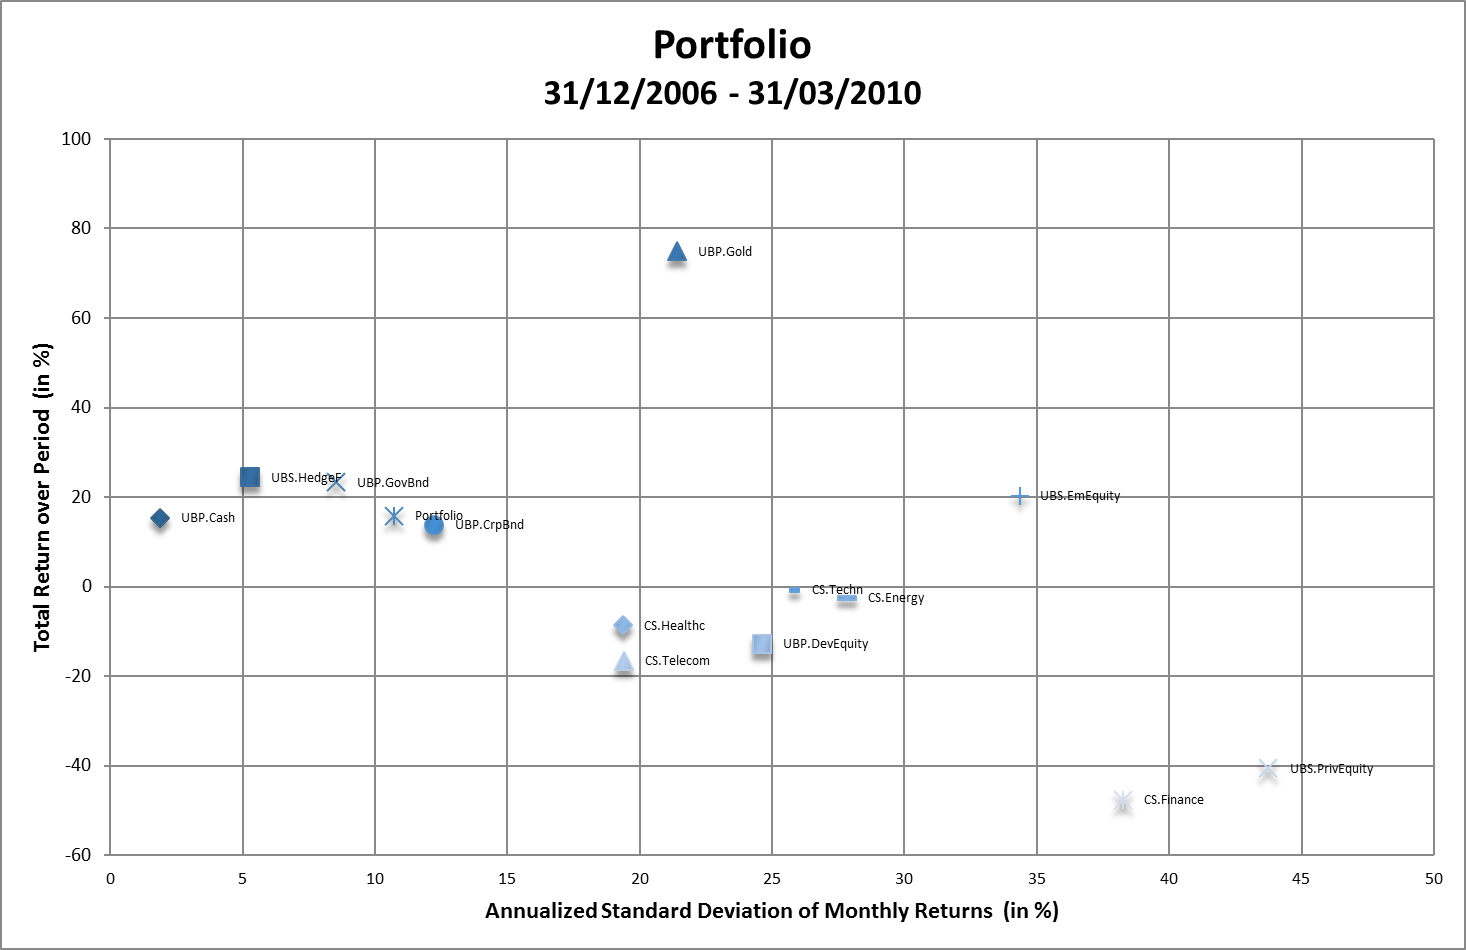 Risk / return profile of portfolio components